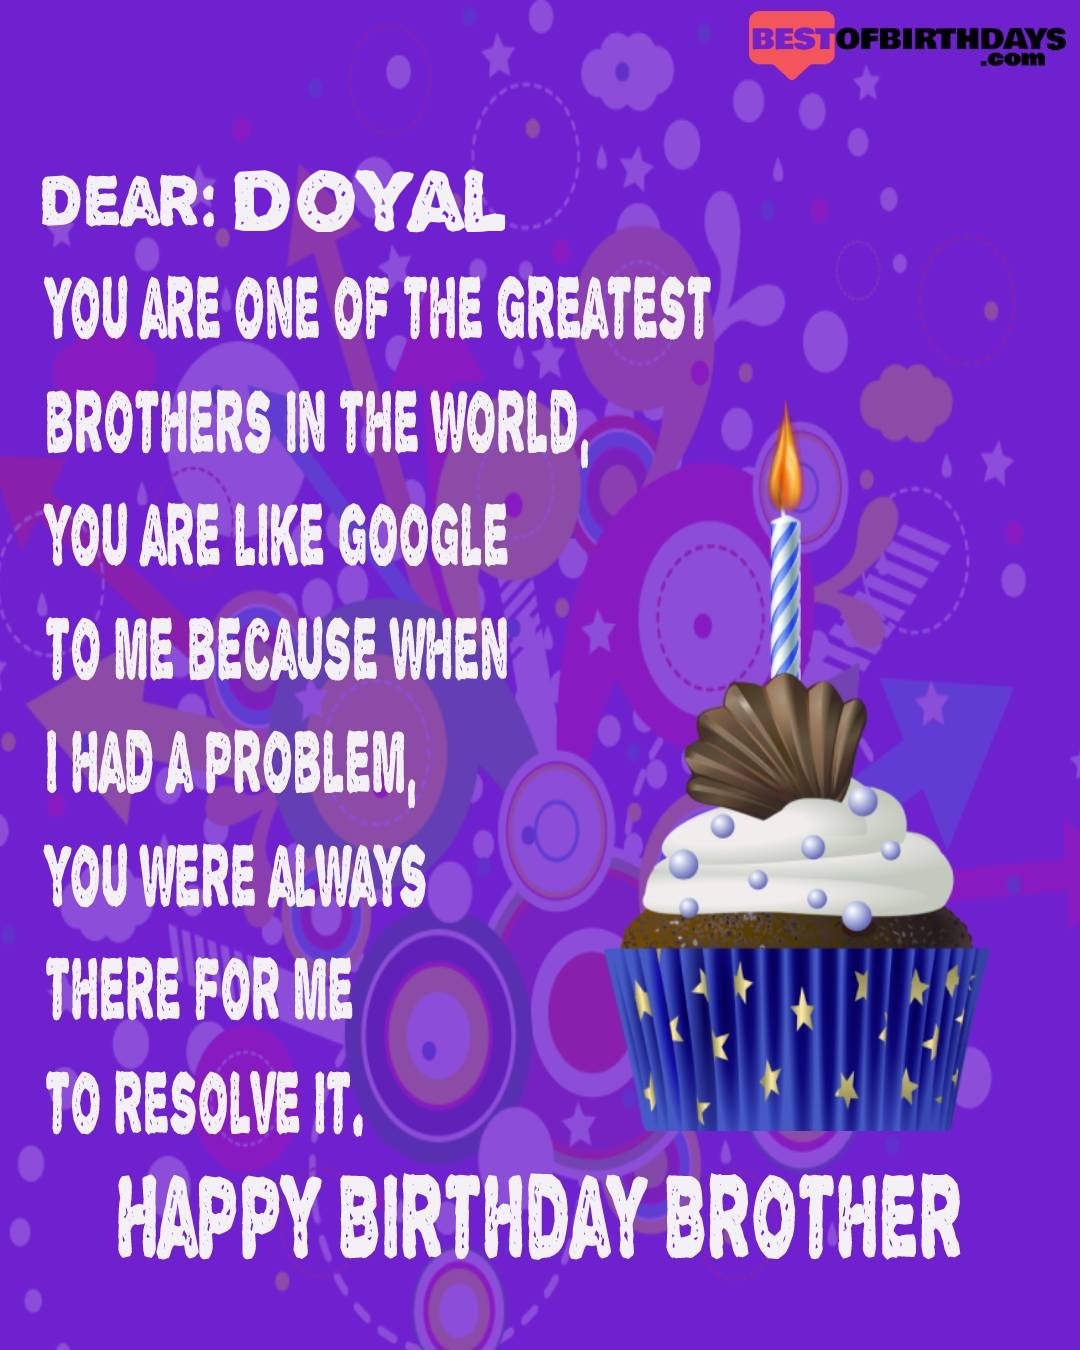 Happy birthday doyal bhai brother bro